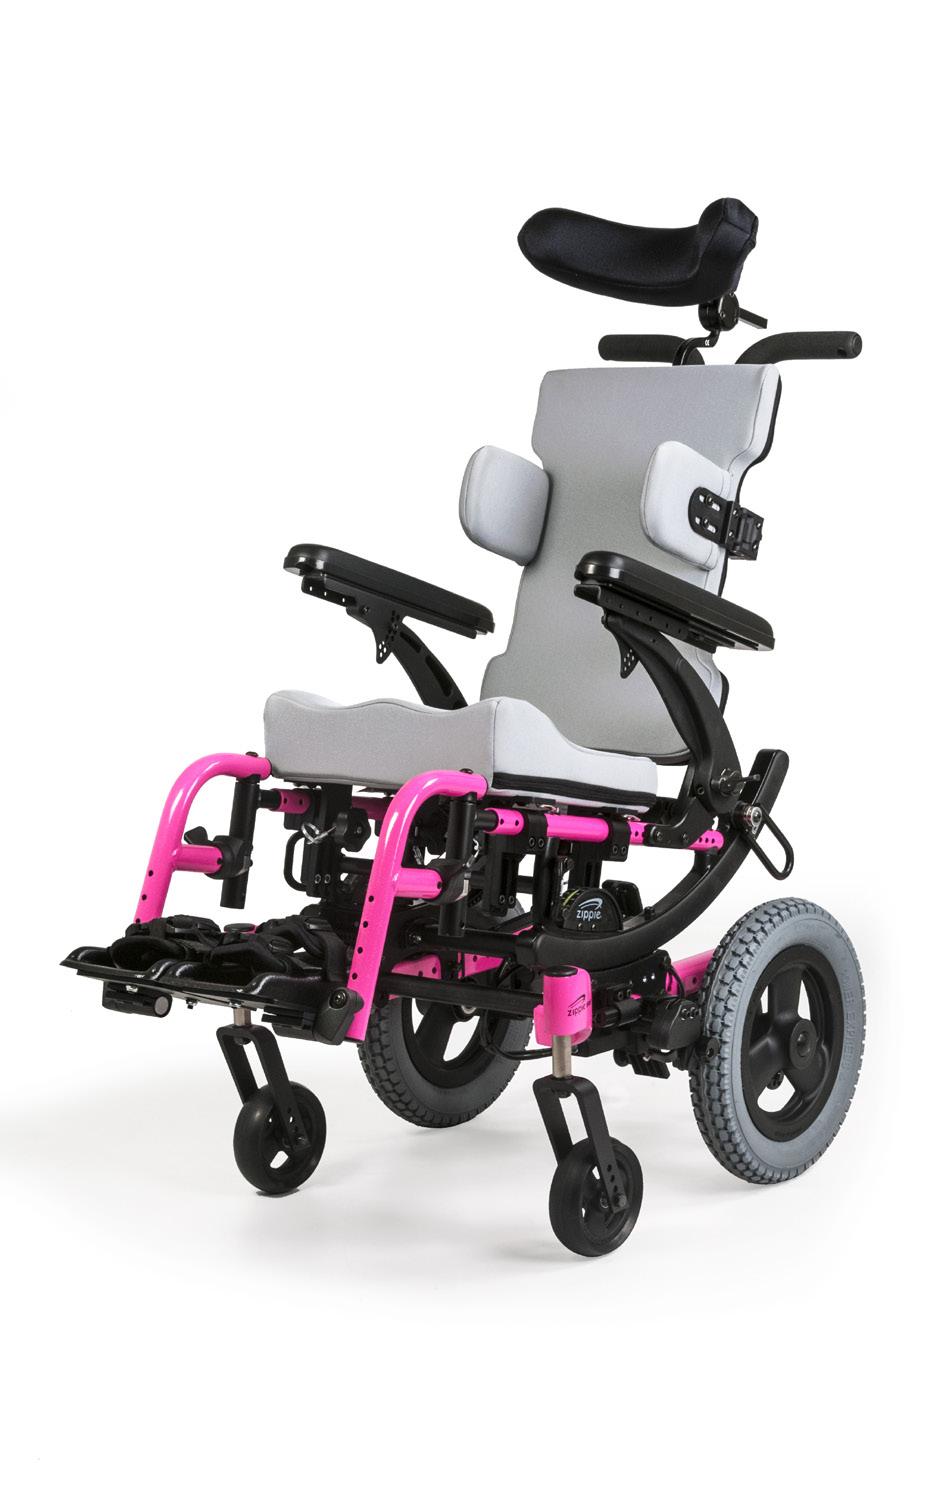 Zippie Iris Zippie Iris Accessories for Caregiver Convenience The IRIS wheelchair is